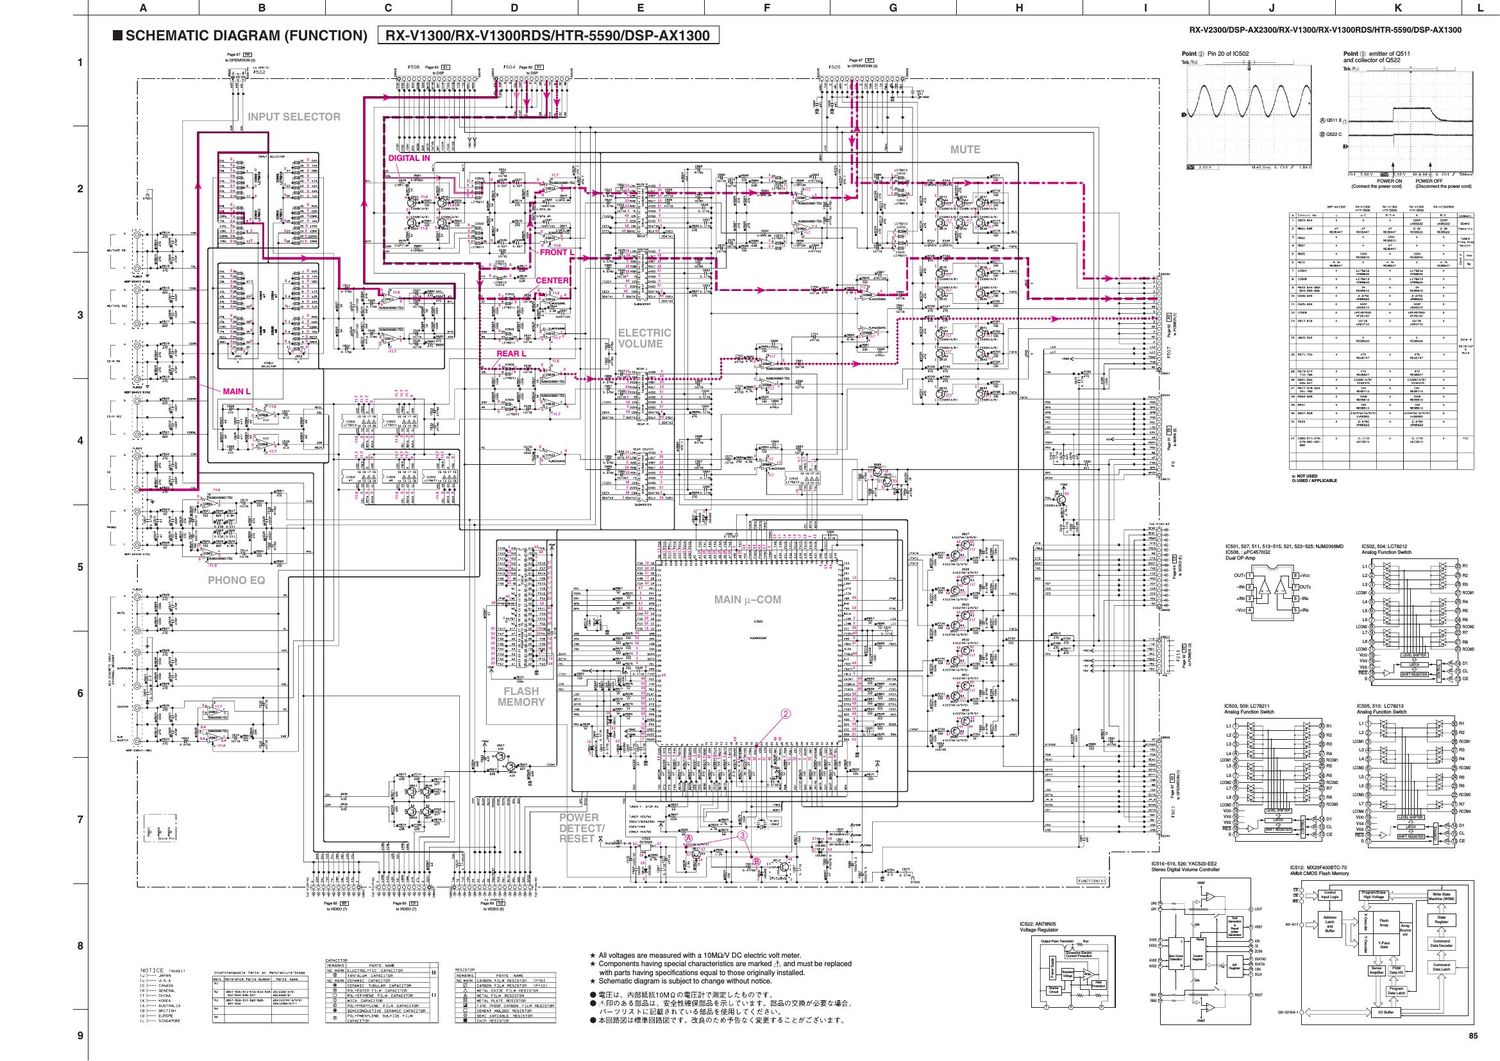 yamaha dsp ax1300 schematic